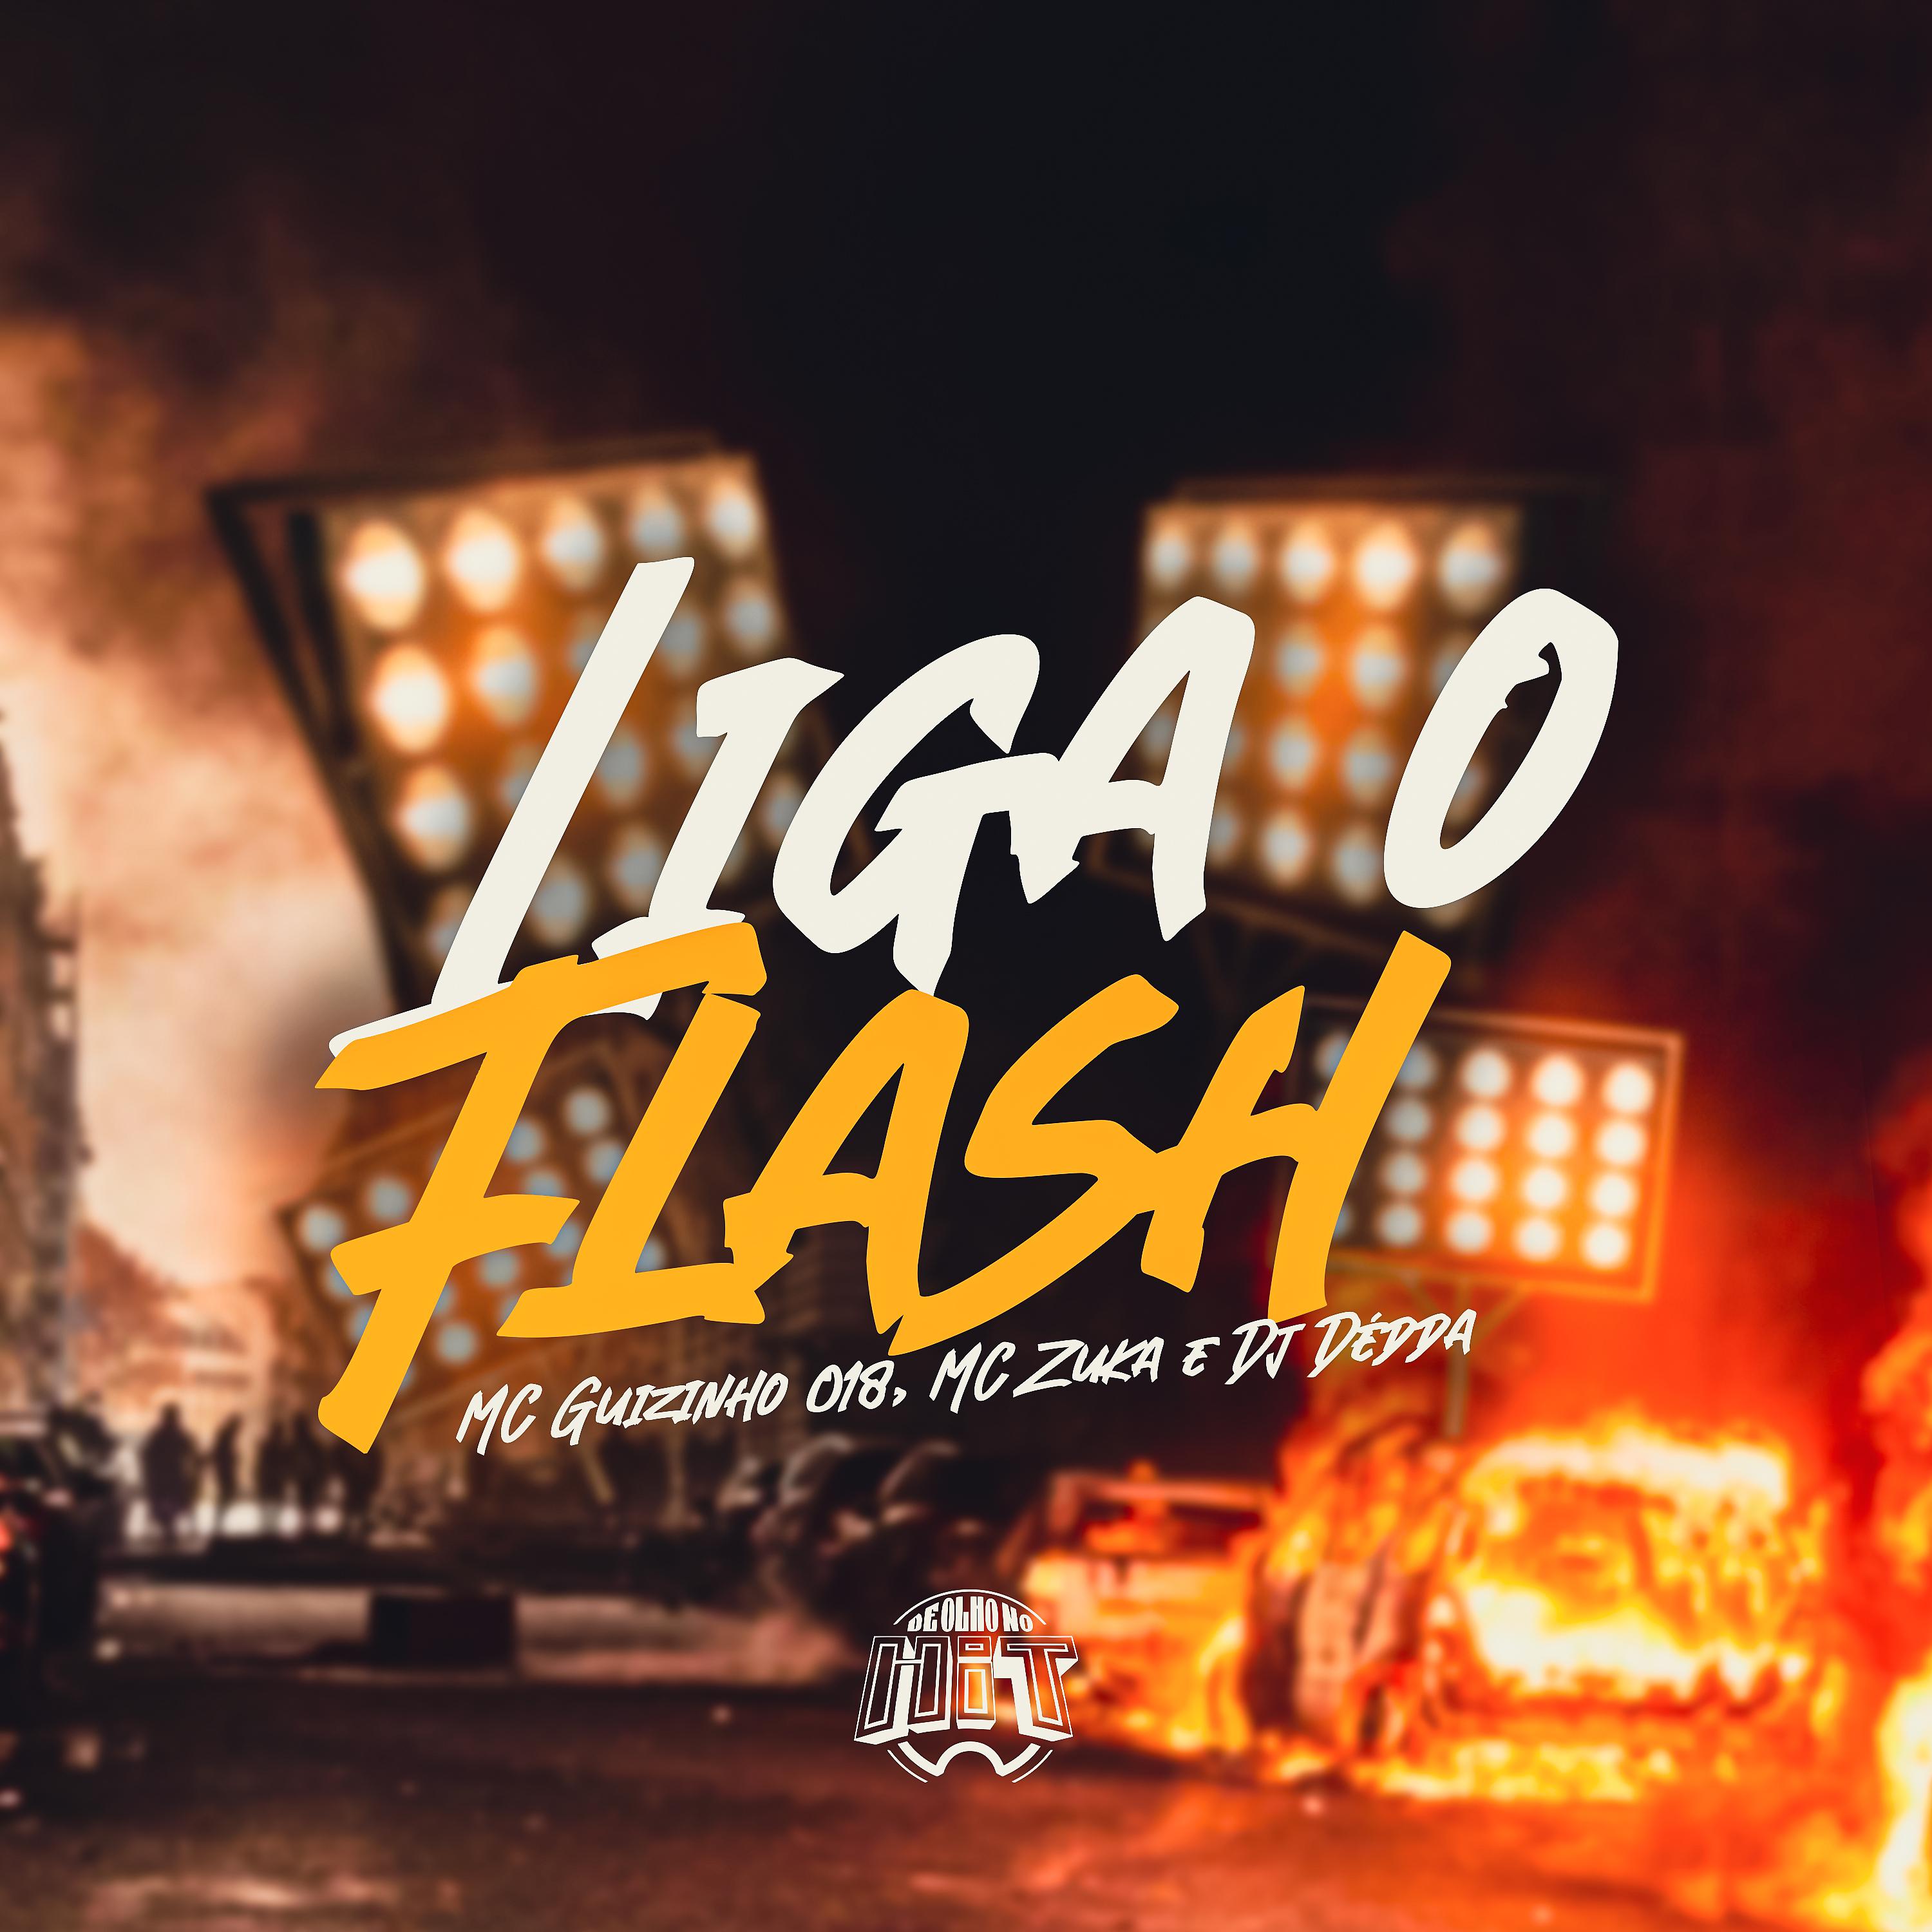 Постер альбома Liga o Flash